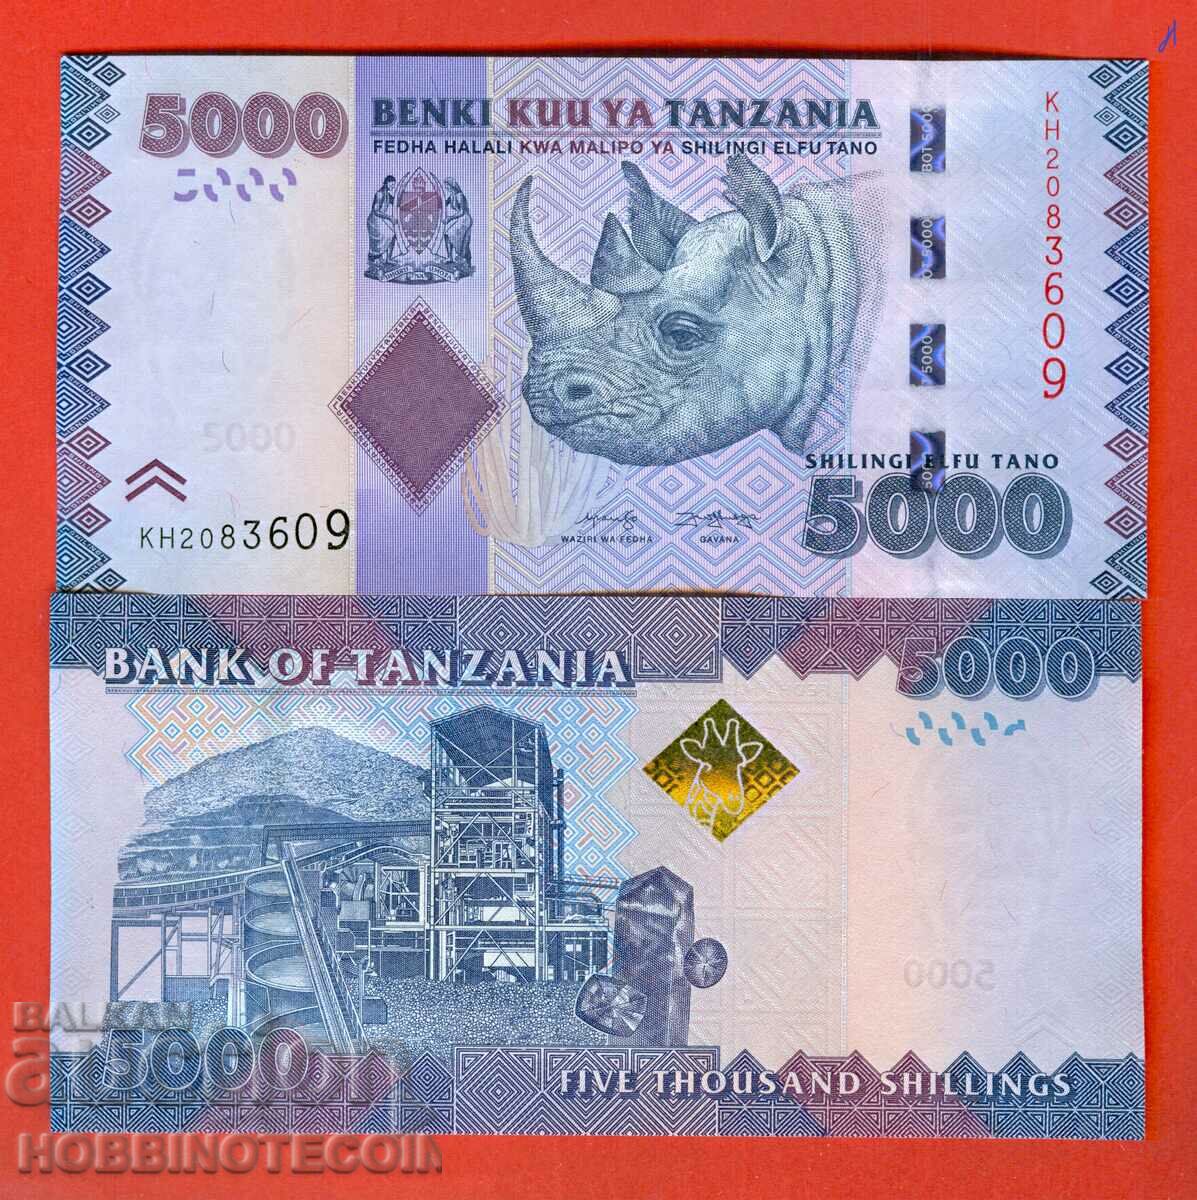 TANZANIA TANZANIA 5000 Shilling emisiune - emisiune 2020 NOU UNC